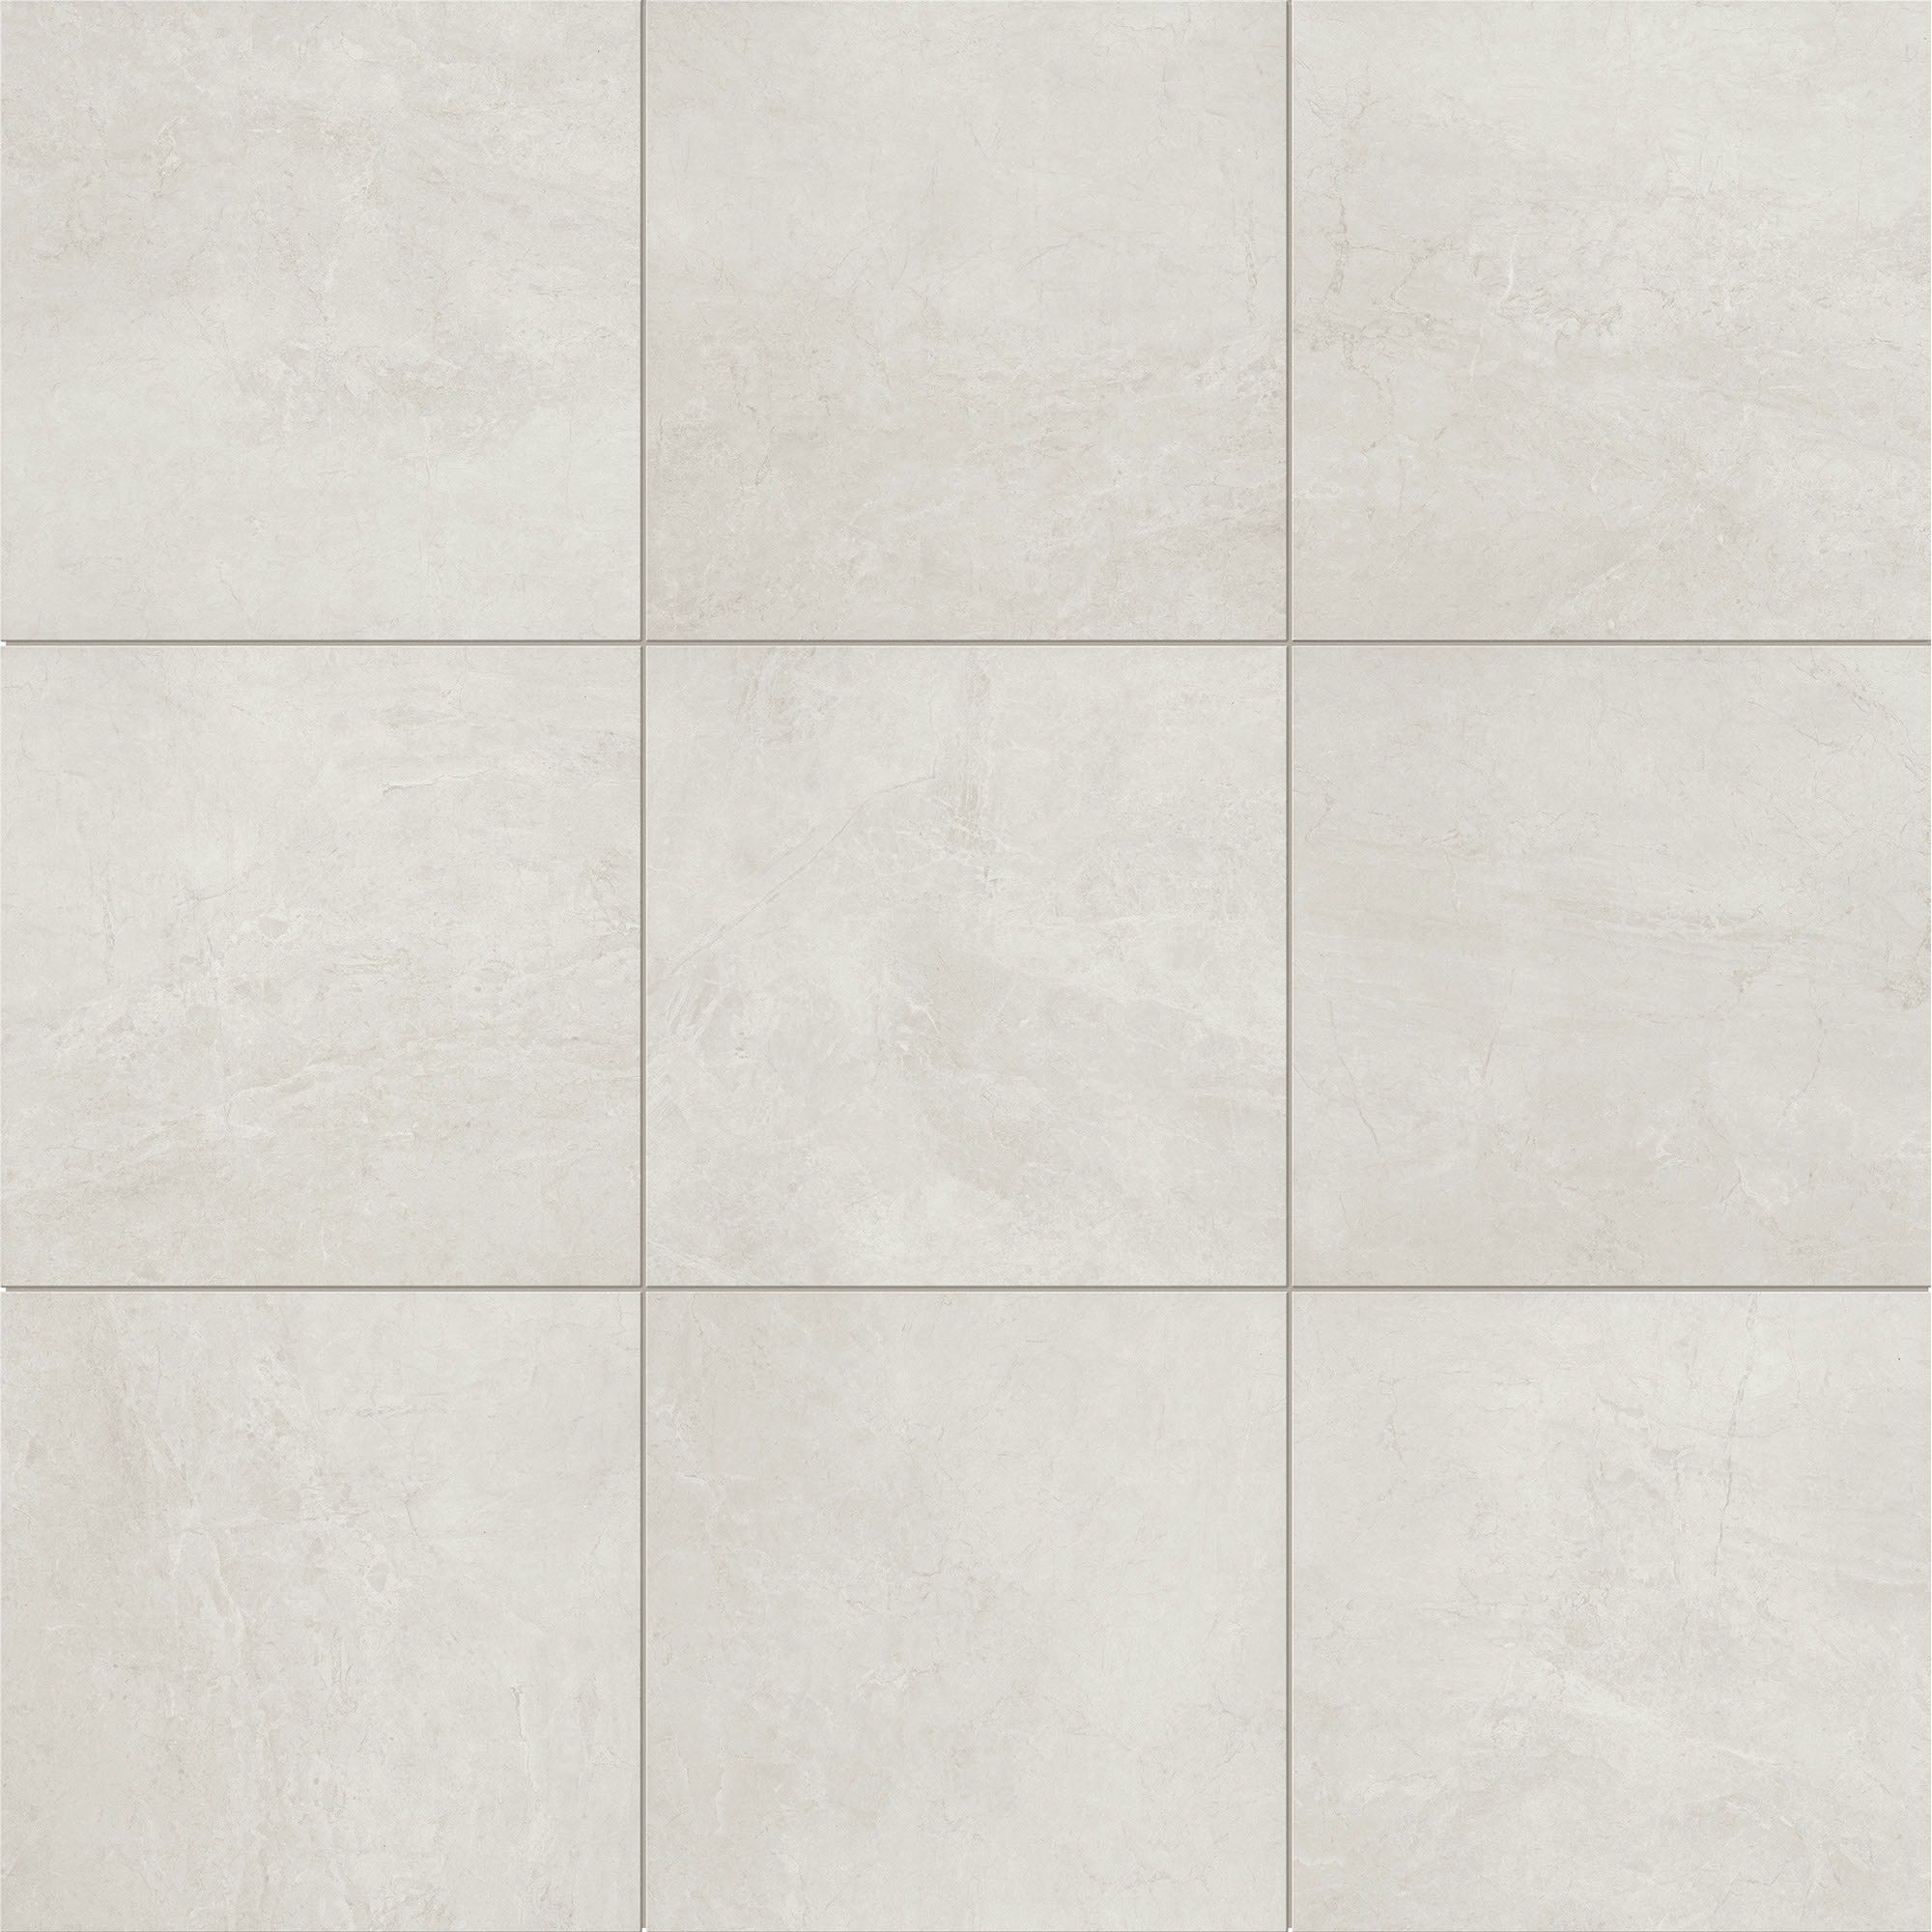 dark gray ceramic tile floor